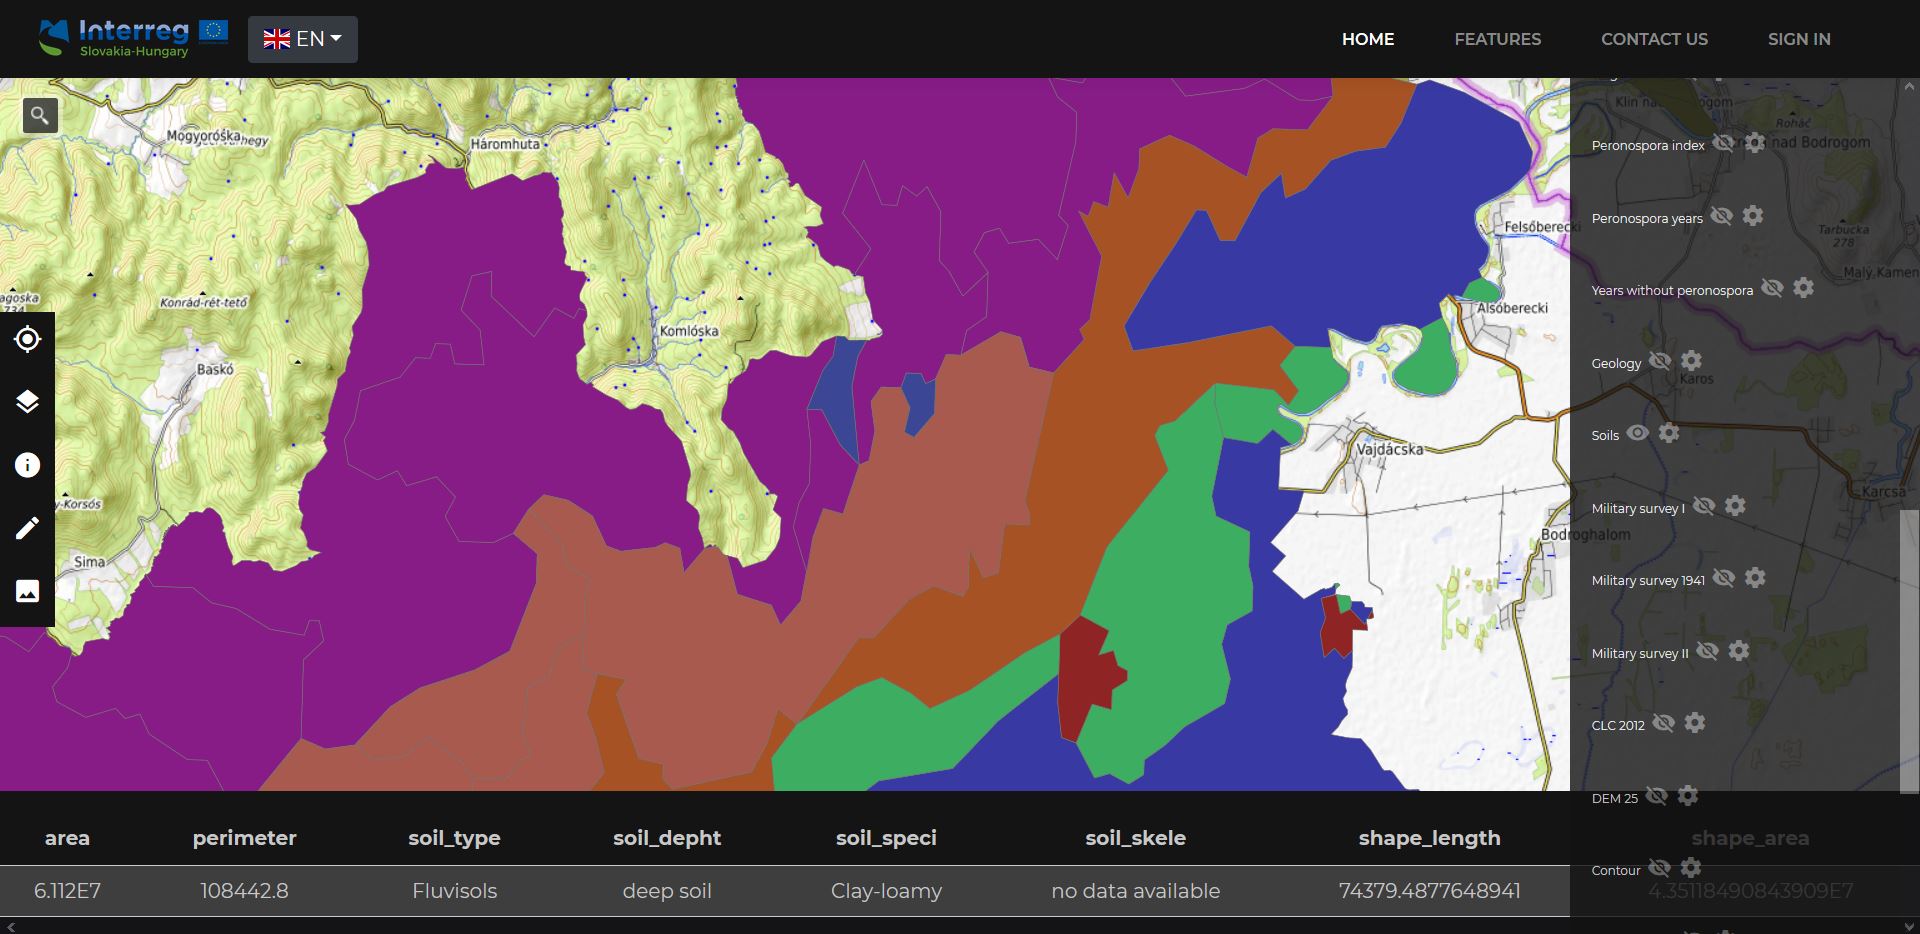 Development of webGIS platform based on big-geodata for the Tokaj Wine Region foster cross-border collaboration